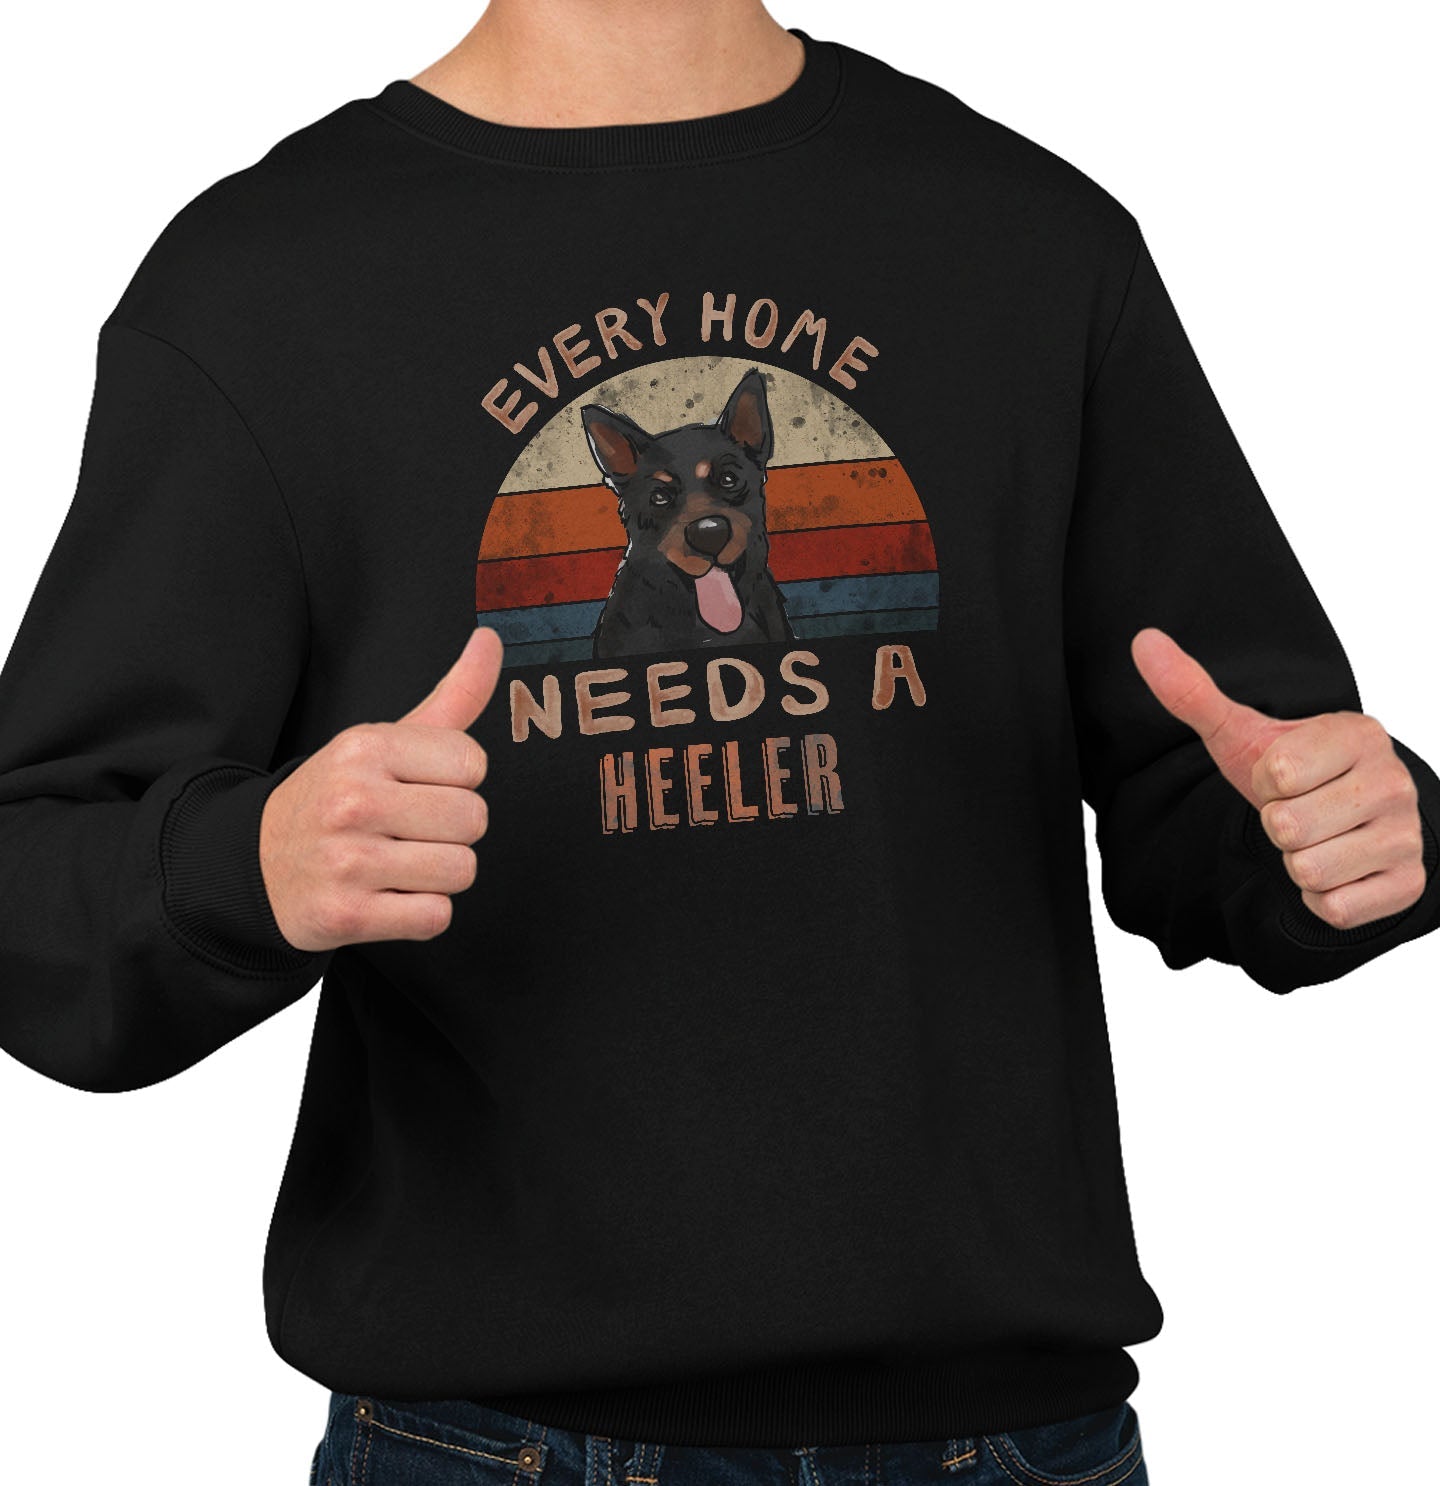 Every Home Needs a Lancashire Heeler - Adult Unisex Crewneck Sweatshirt